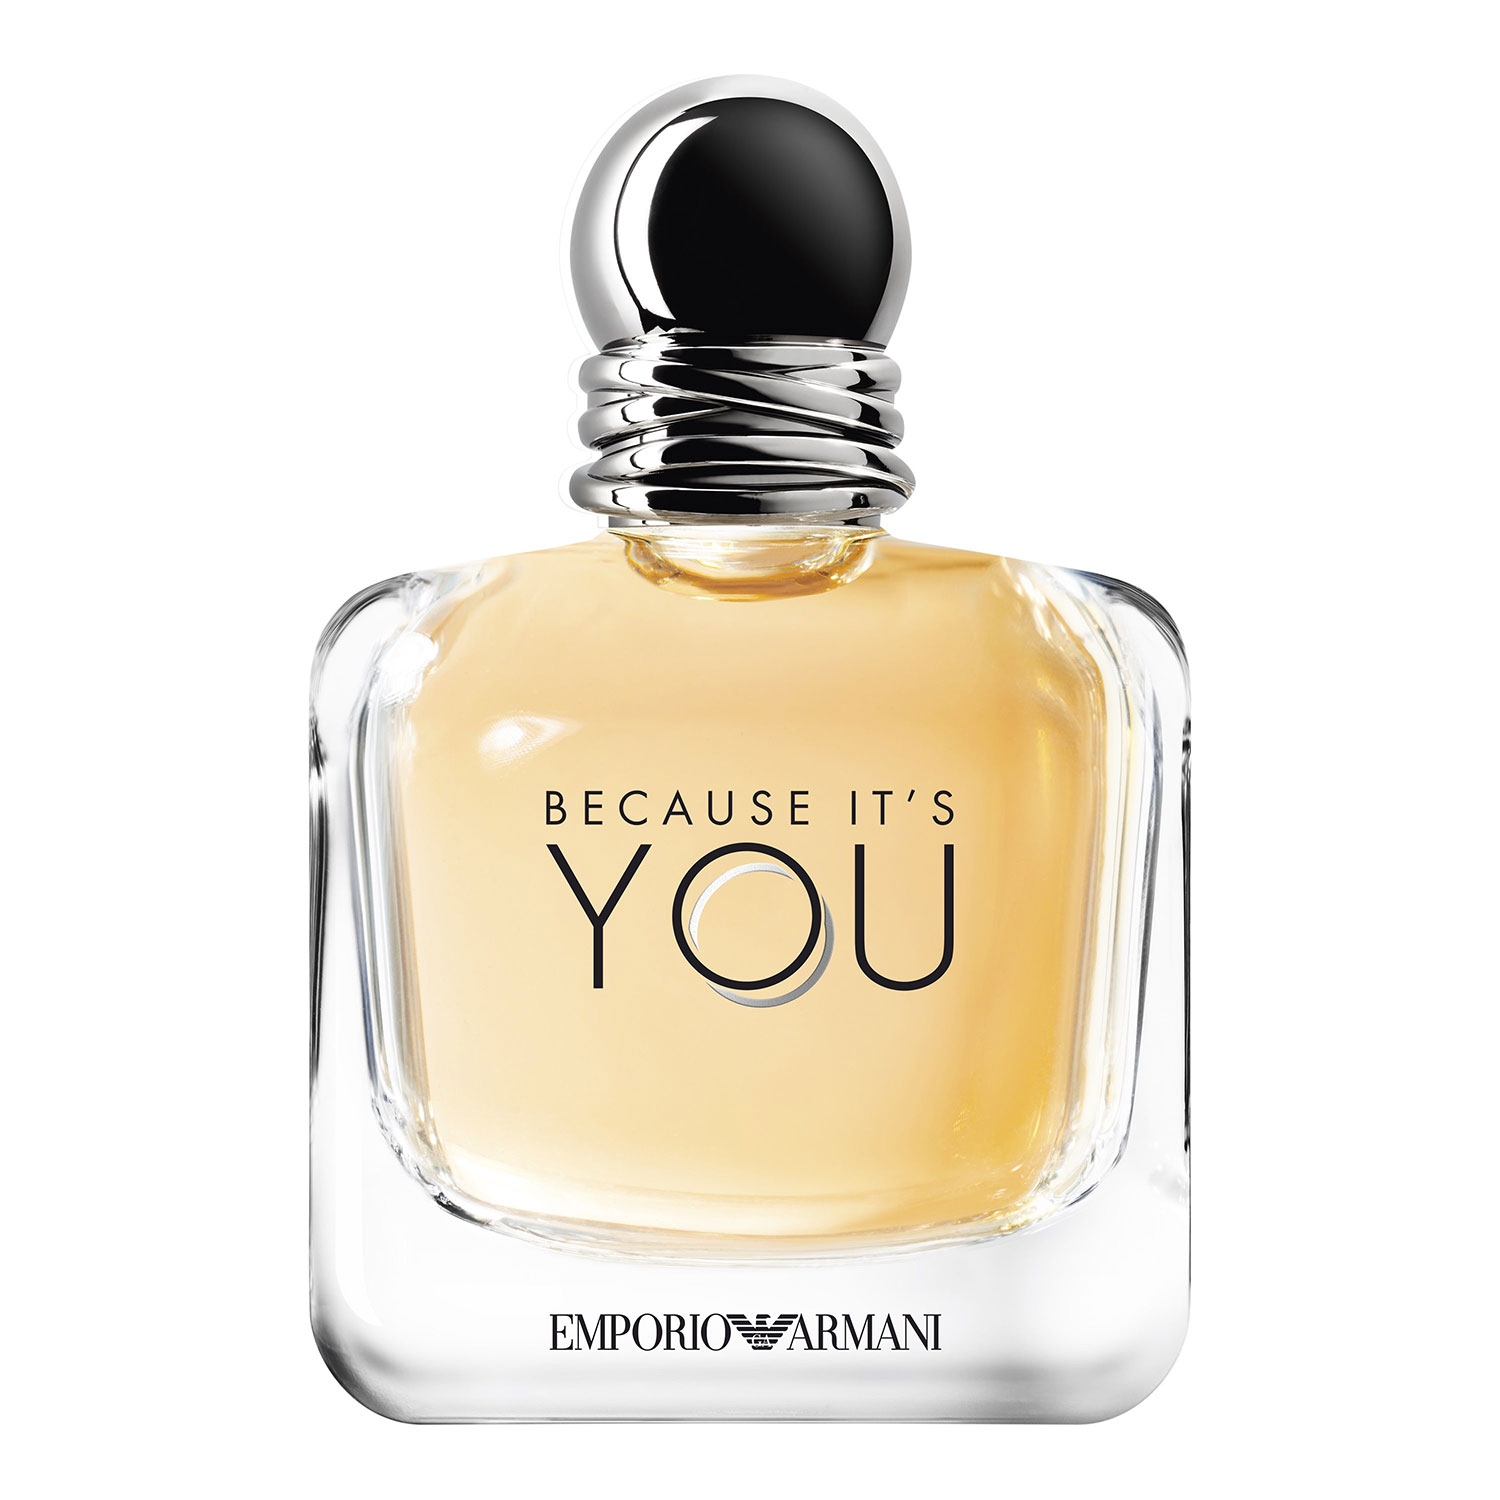 Product image from Emporio Armani - Because it's YOU Eau de Parfum